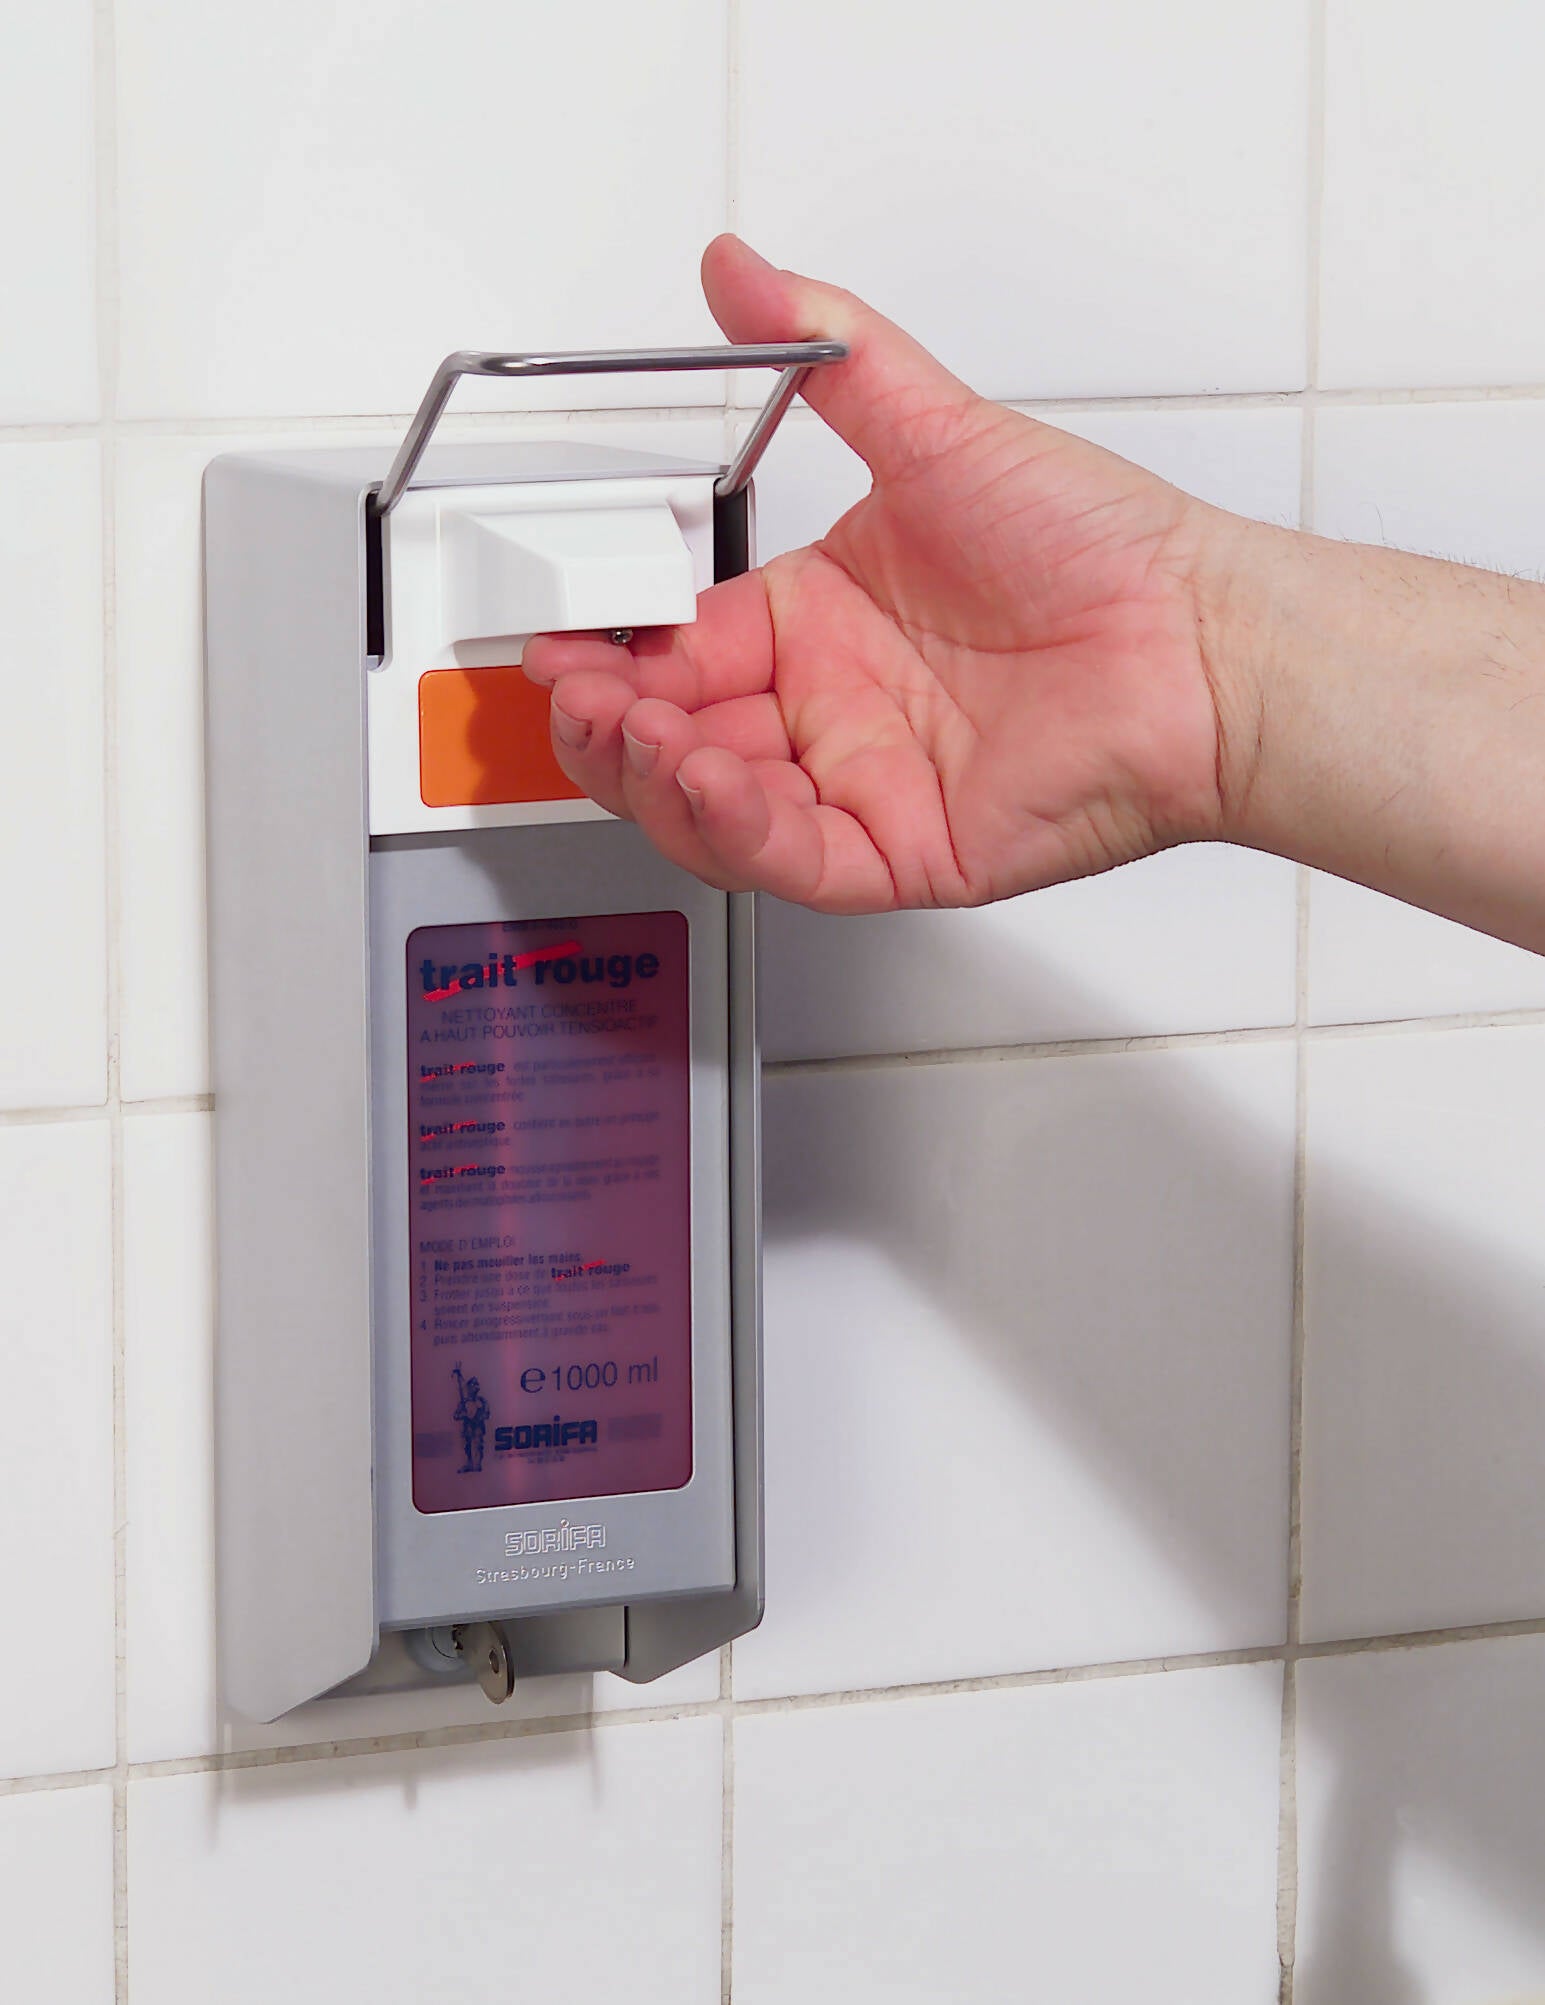 SORIFA - Set of 2 - Robust, ergonomic, lockable metal wall dispenser for 1L SORIFA brand bottle - For gels and liquid soaps.